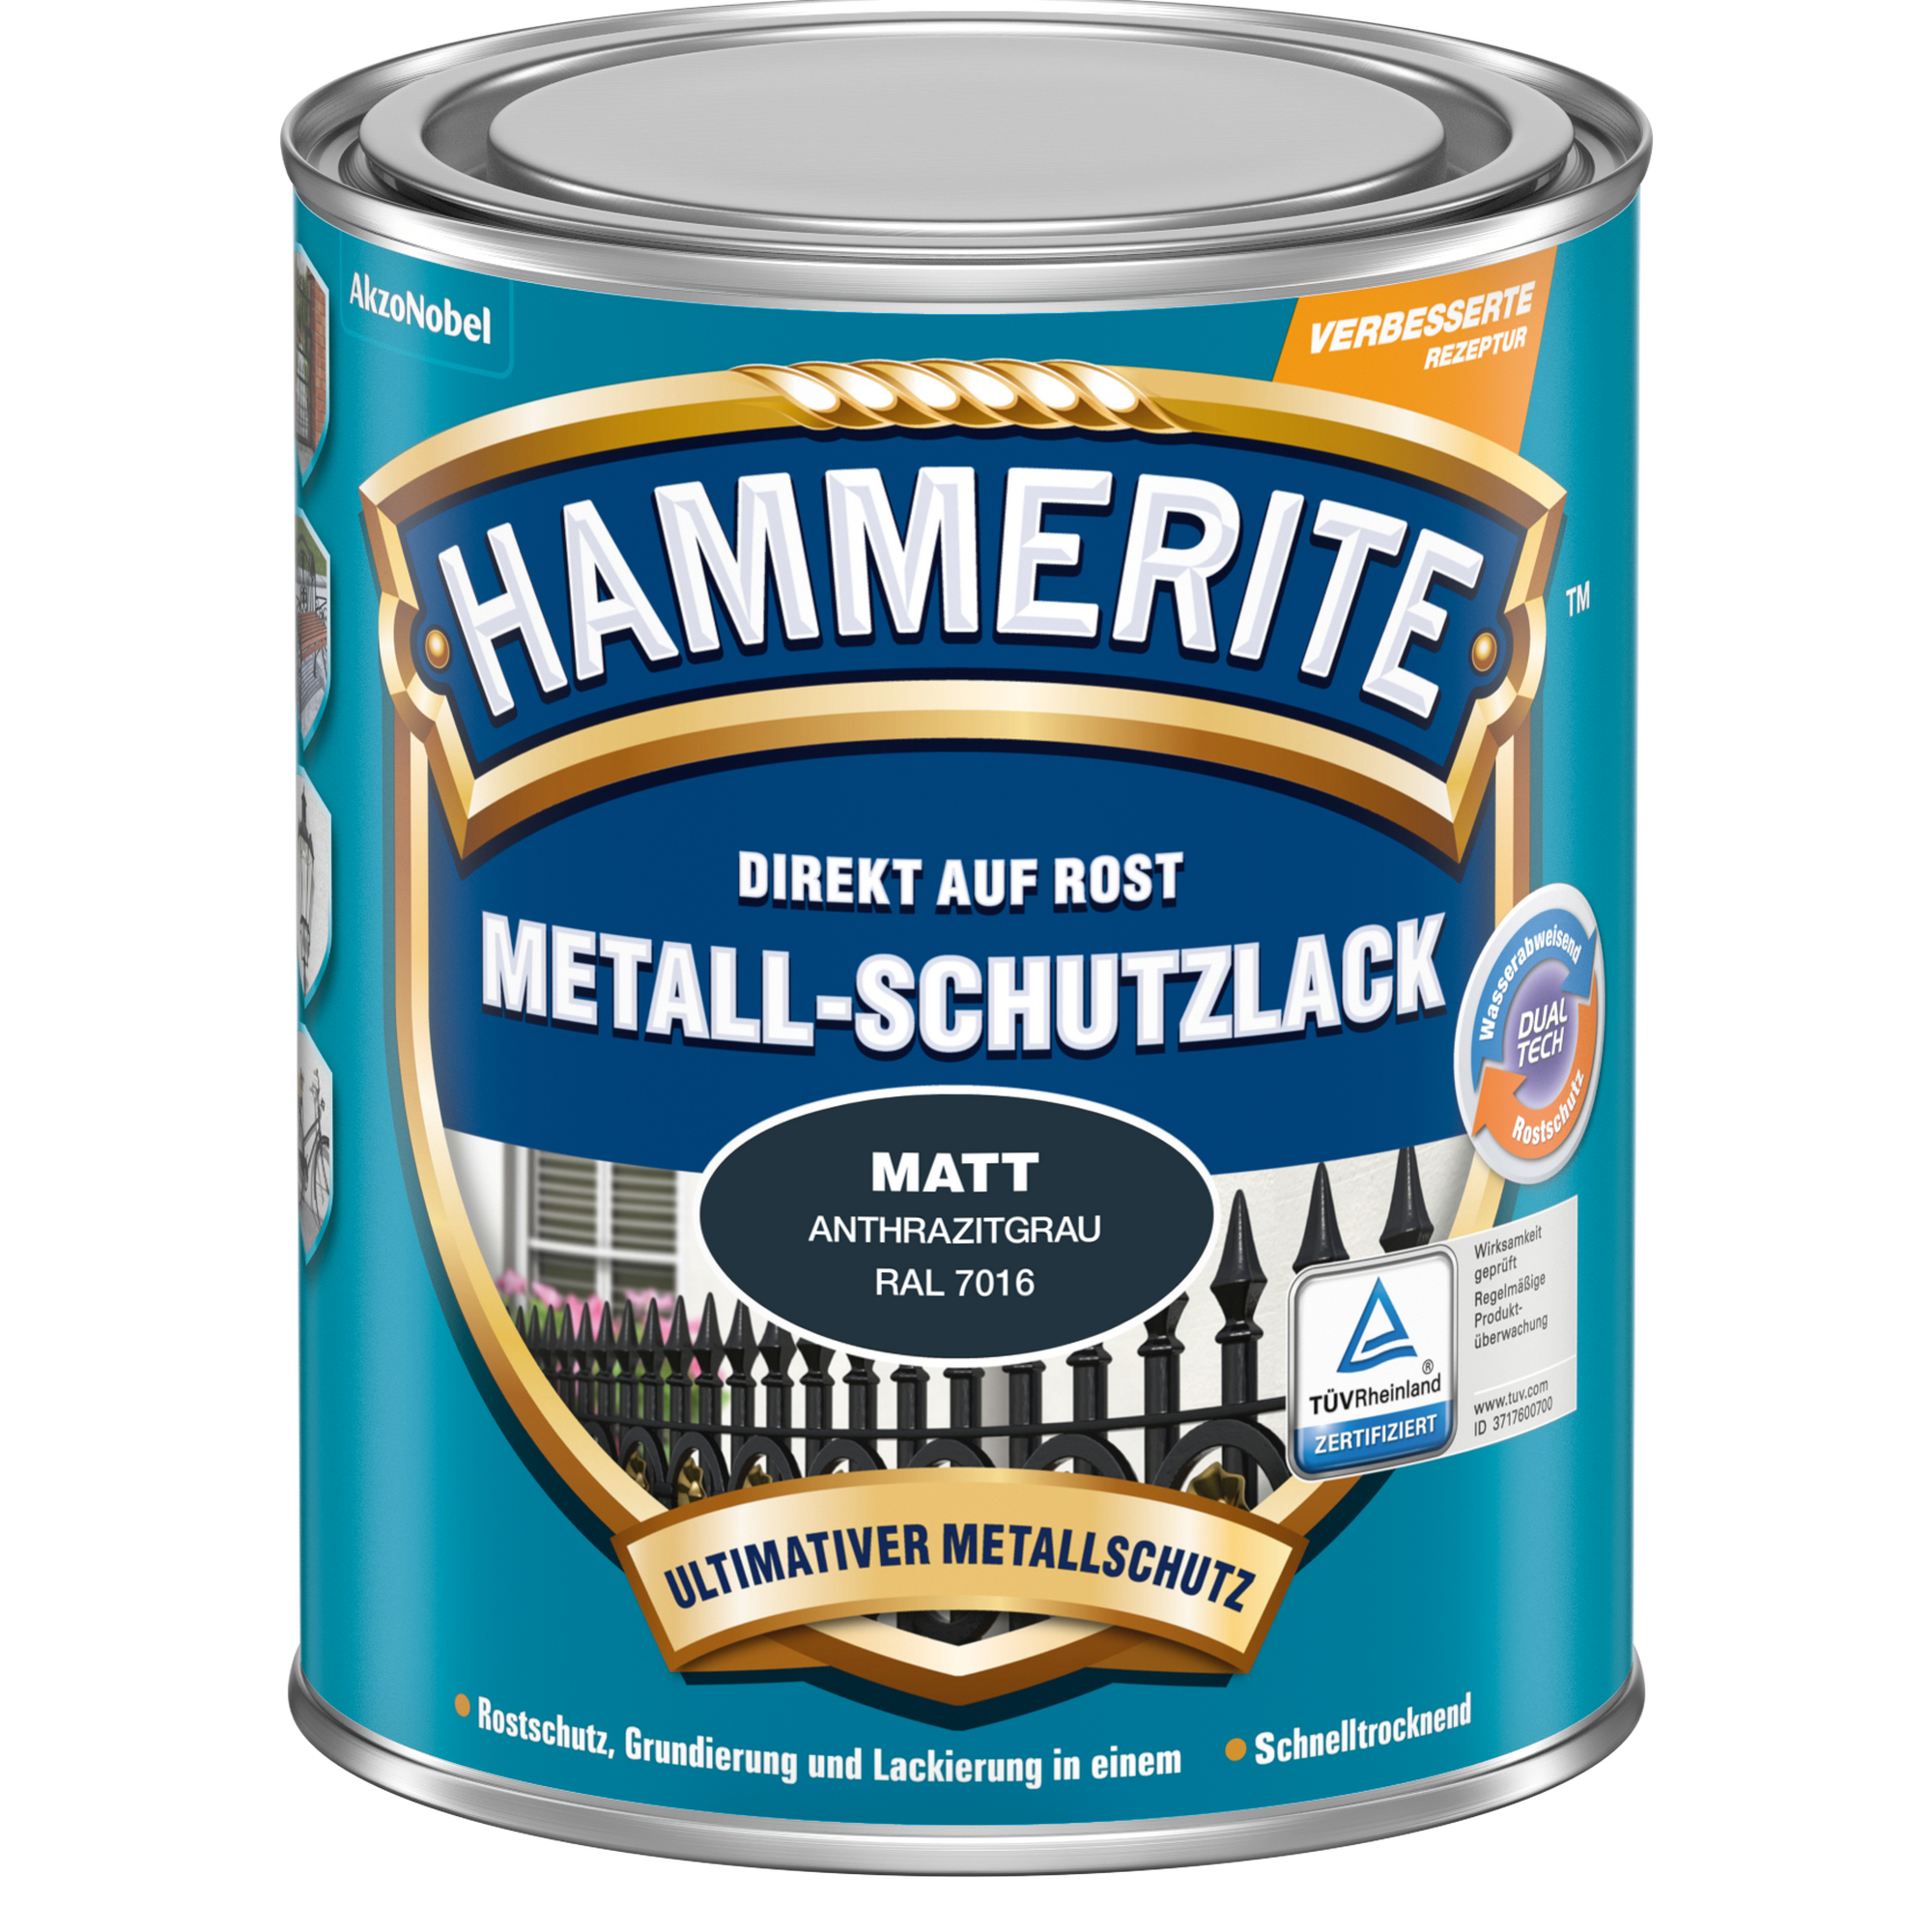 Metallschutzlack anthrazitgrau matt 750 ml + product picture